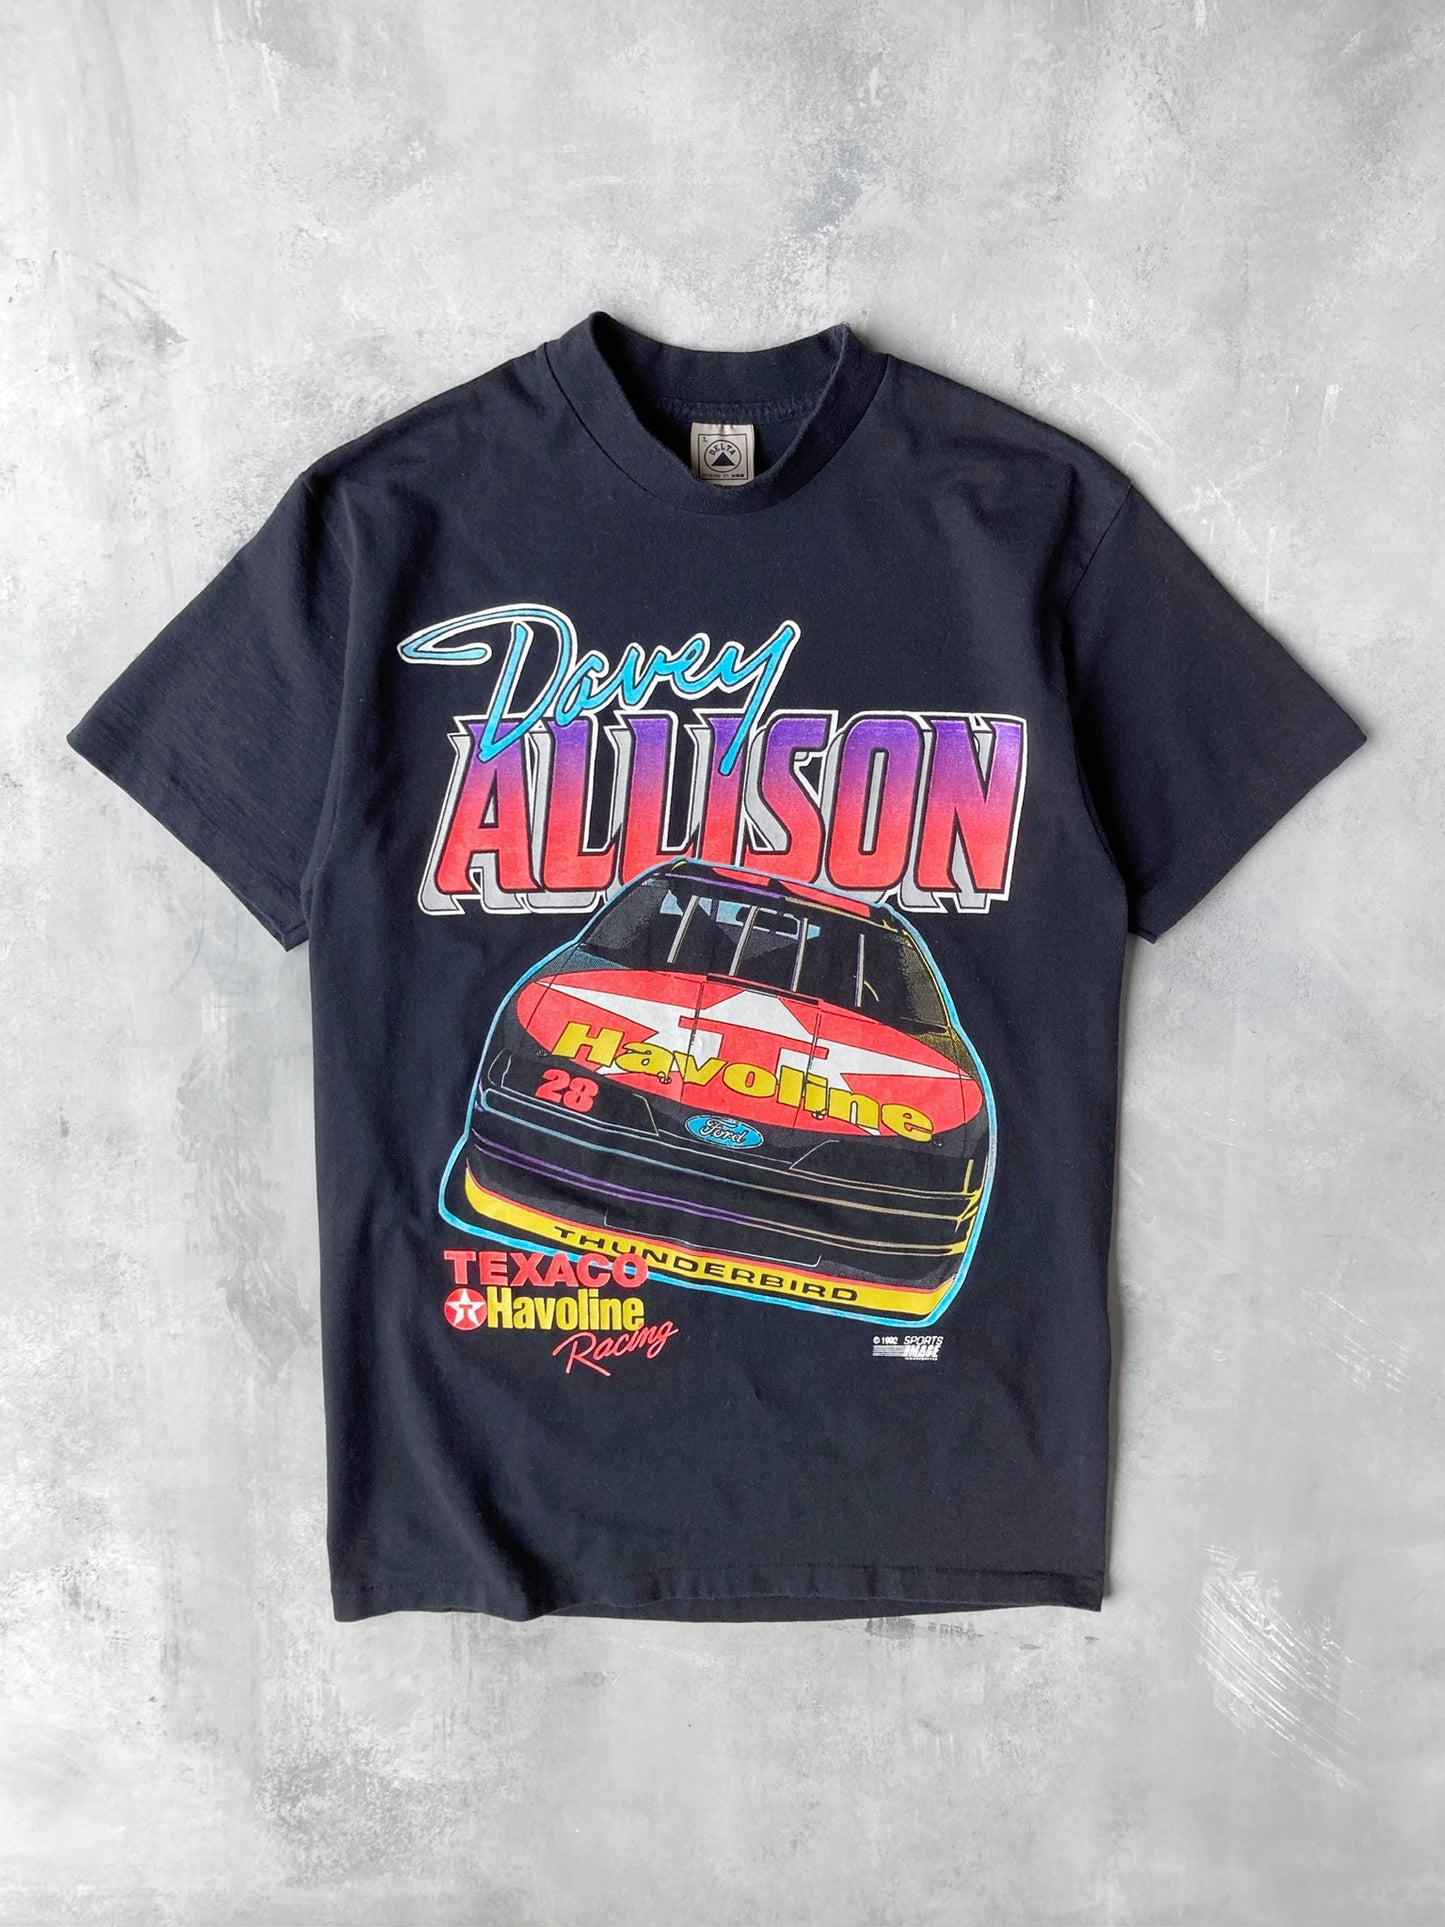 Davey Allison Nascar T-Shirt '92 -  Medium